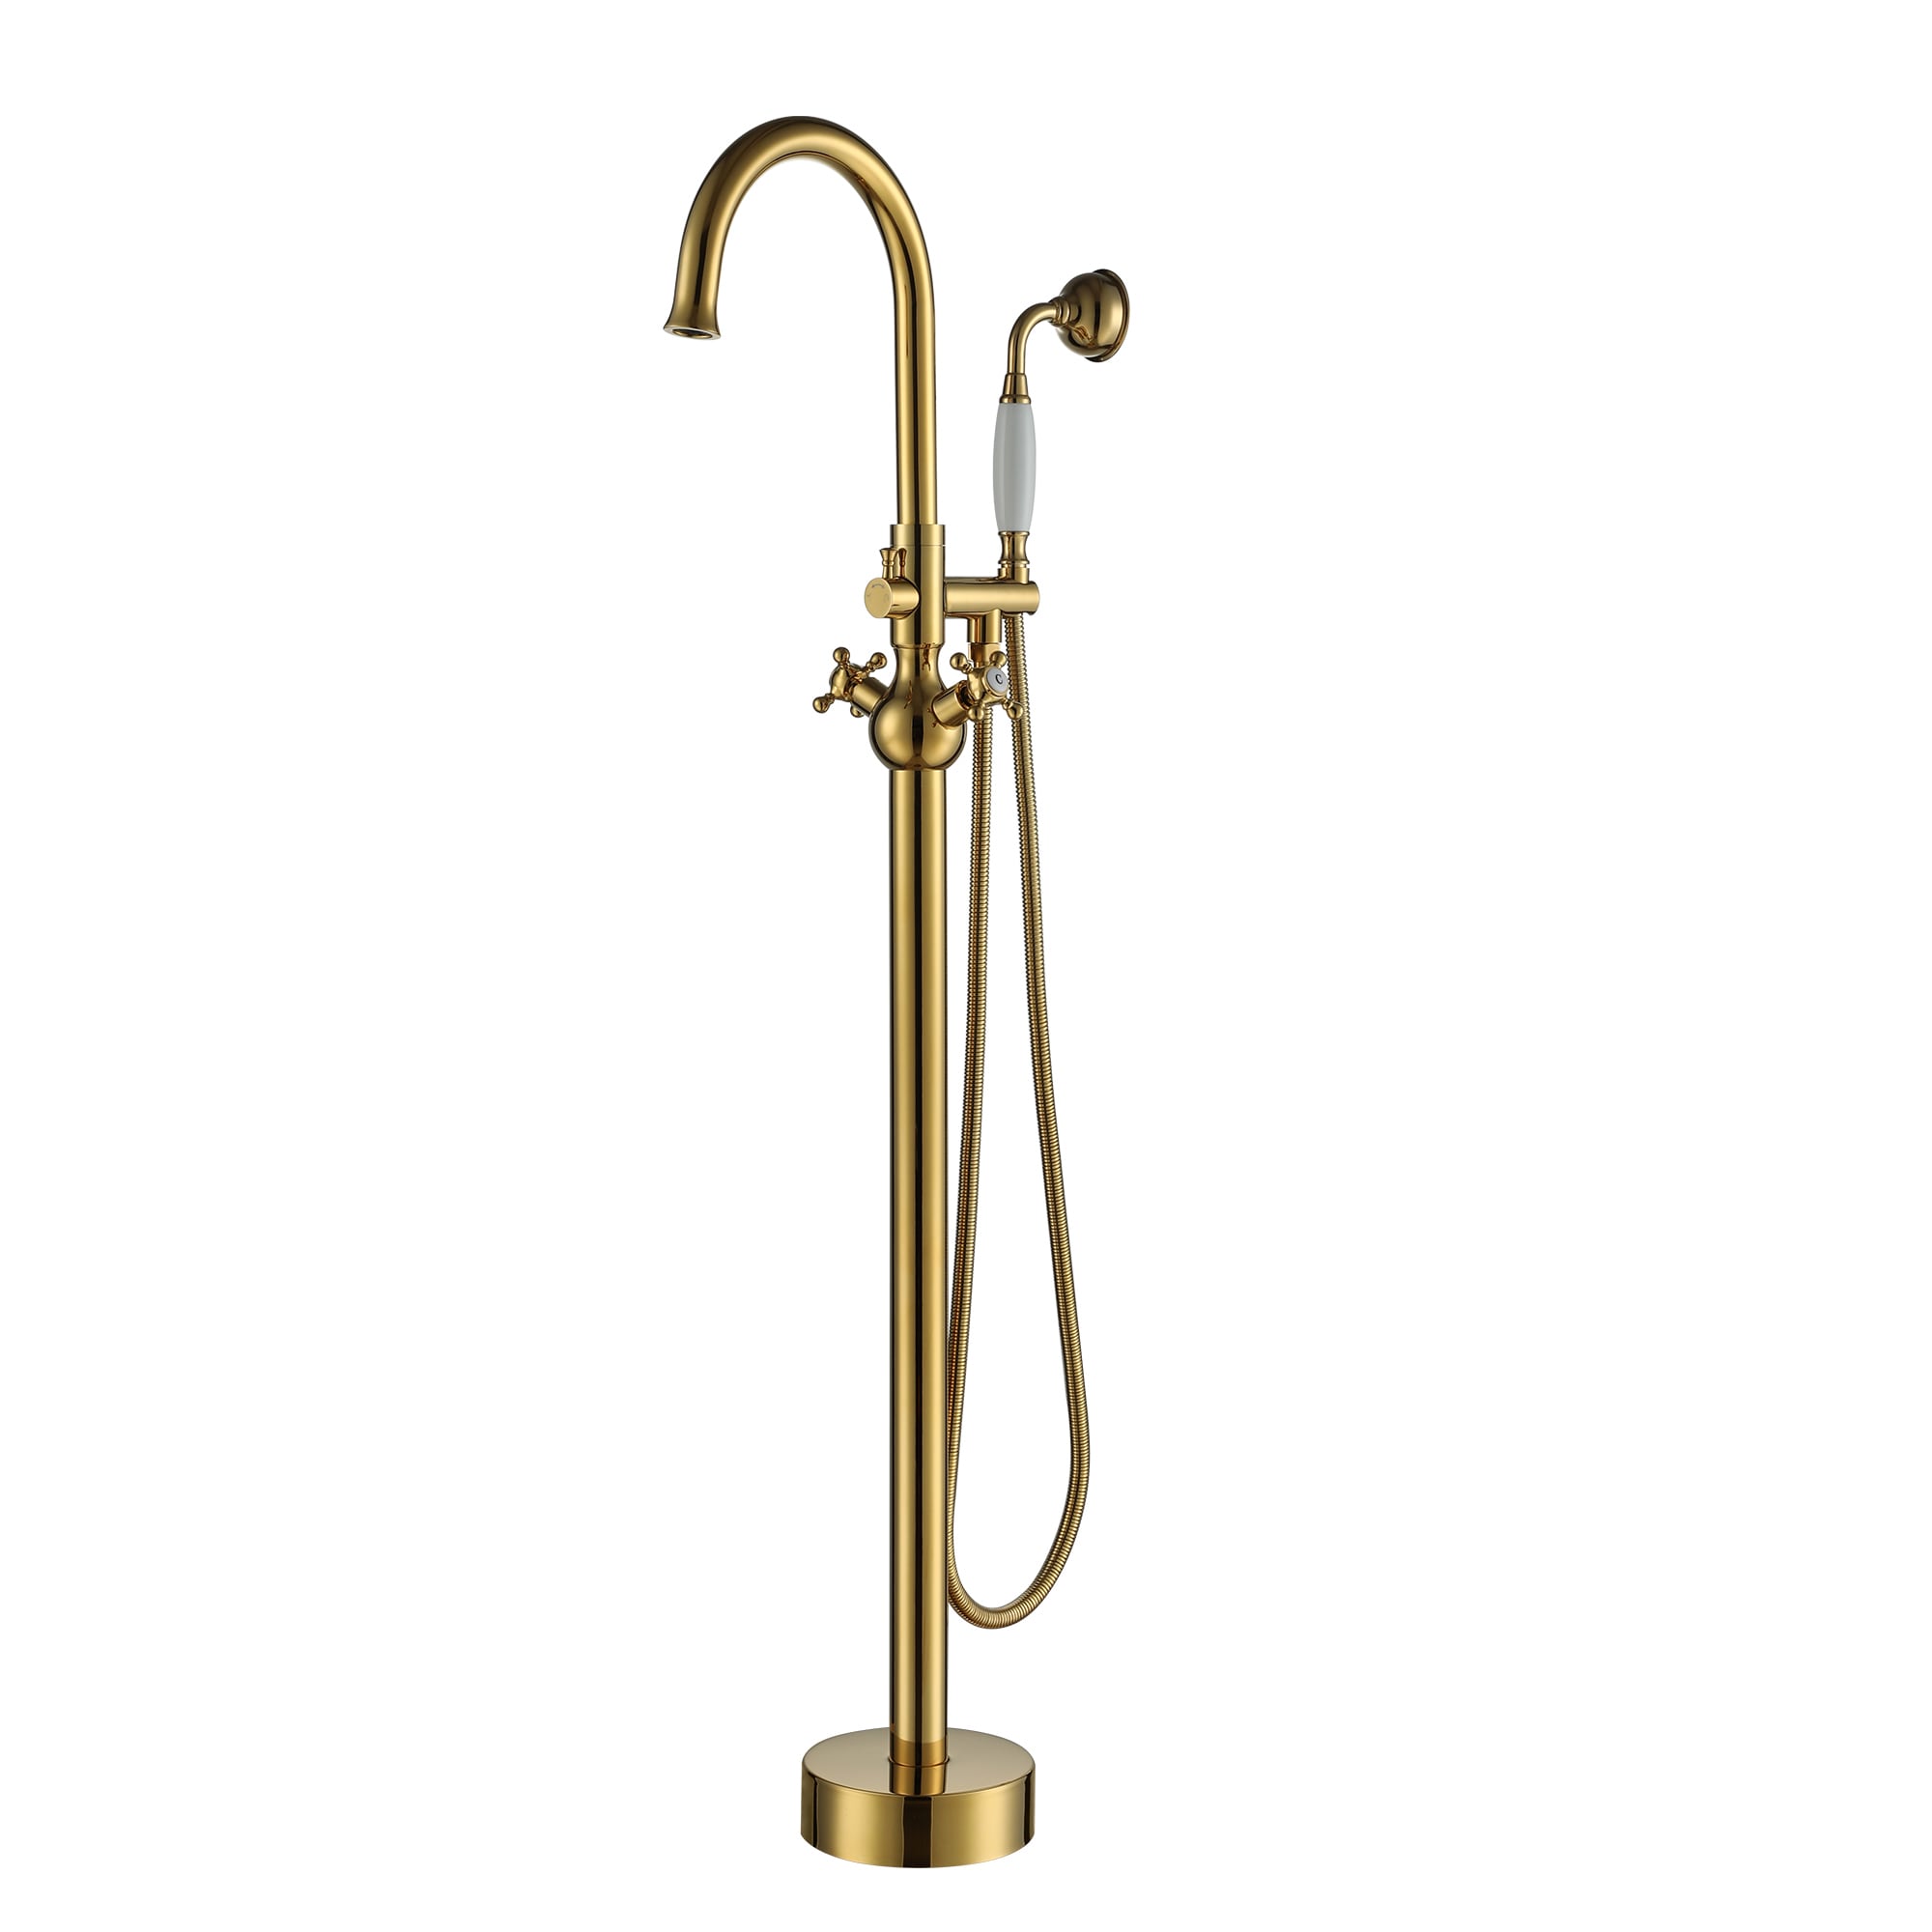 CASAINC Freestanding Bathtub Faucet Titanium Gold 2-handle Freestanding Swivel Bathtub Faucet with Hand Shower (Valve Included)